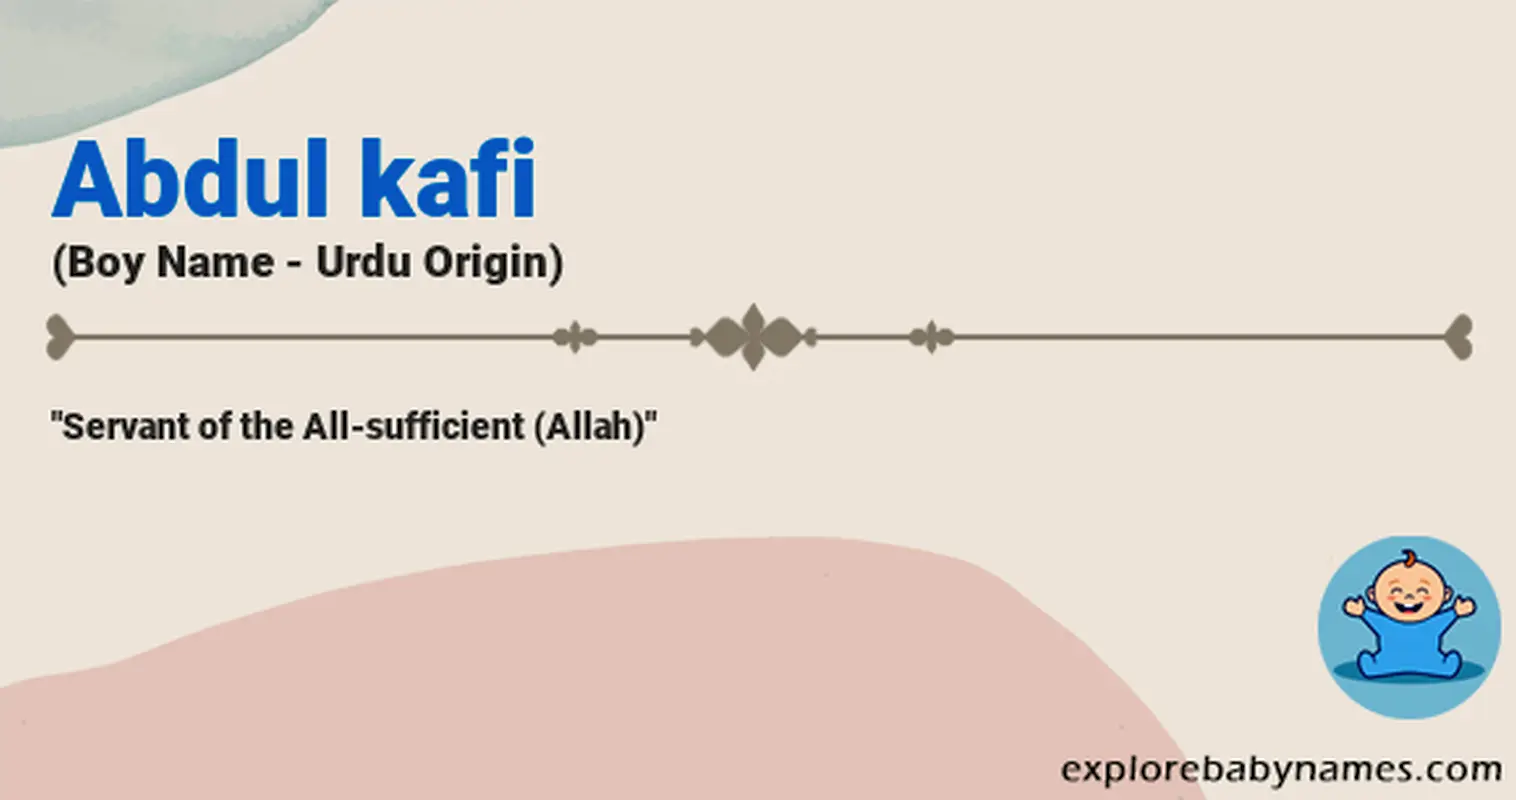 Meaning of Abdul kafi